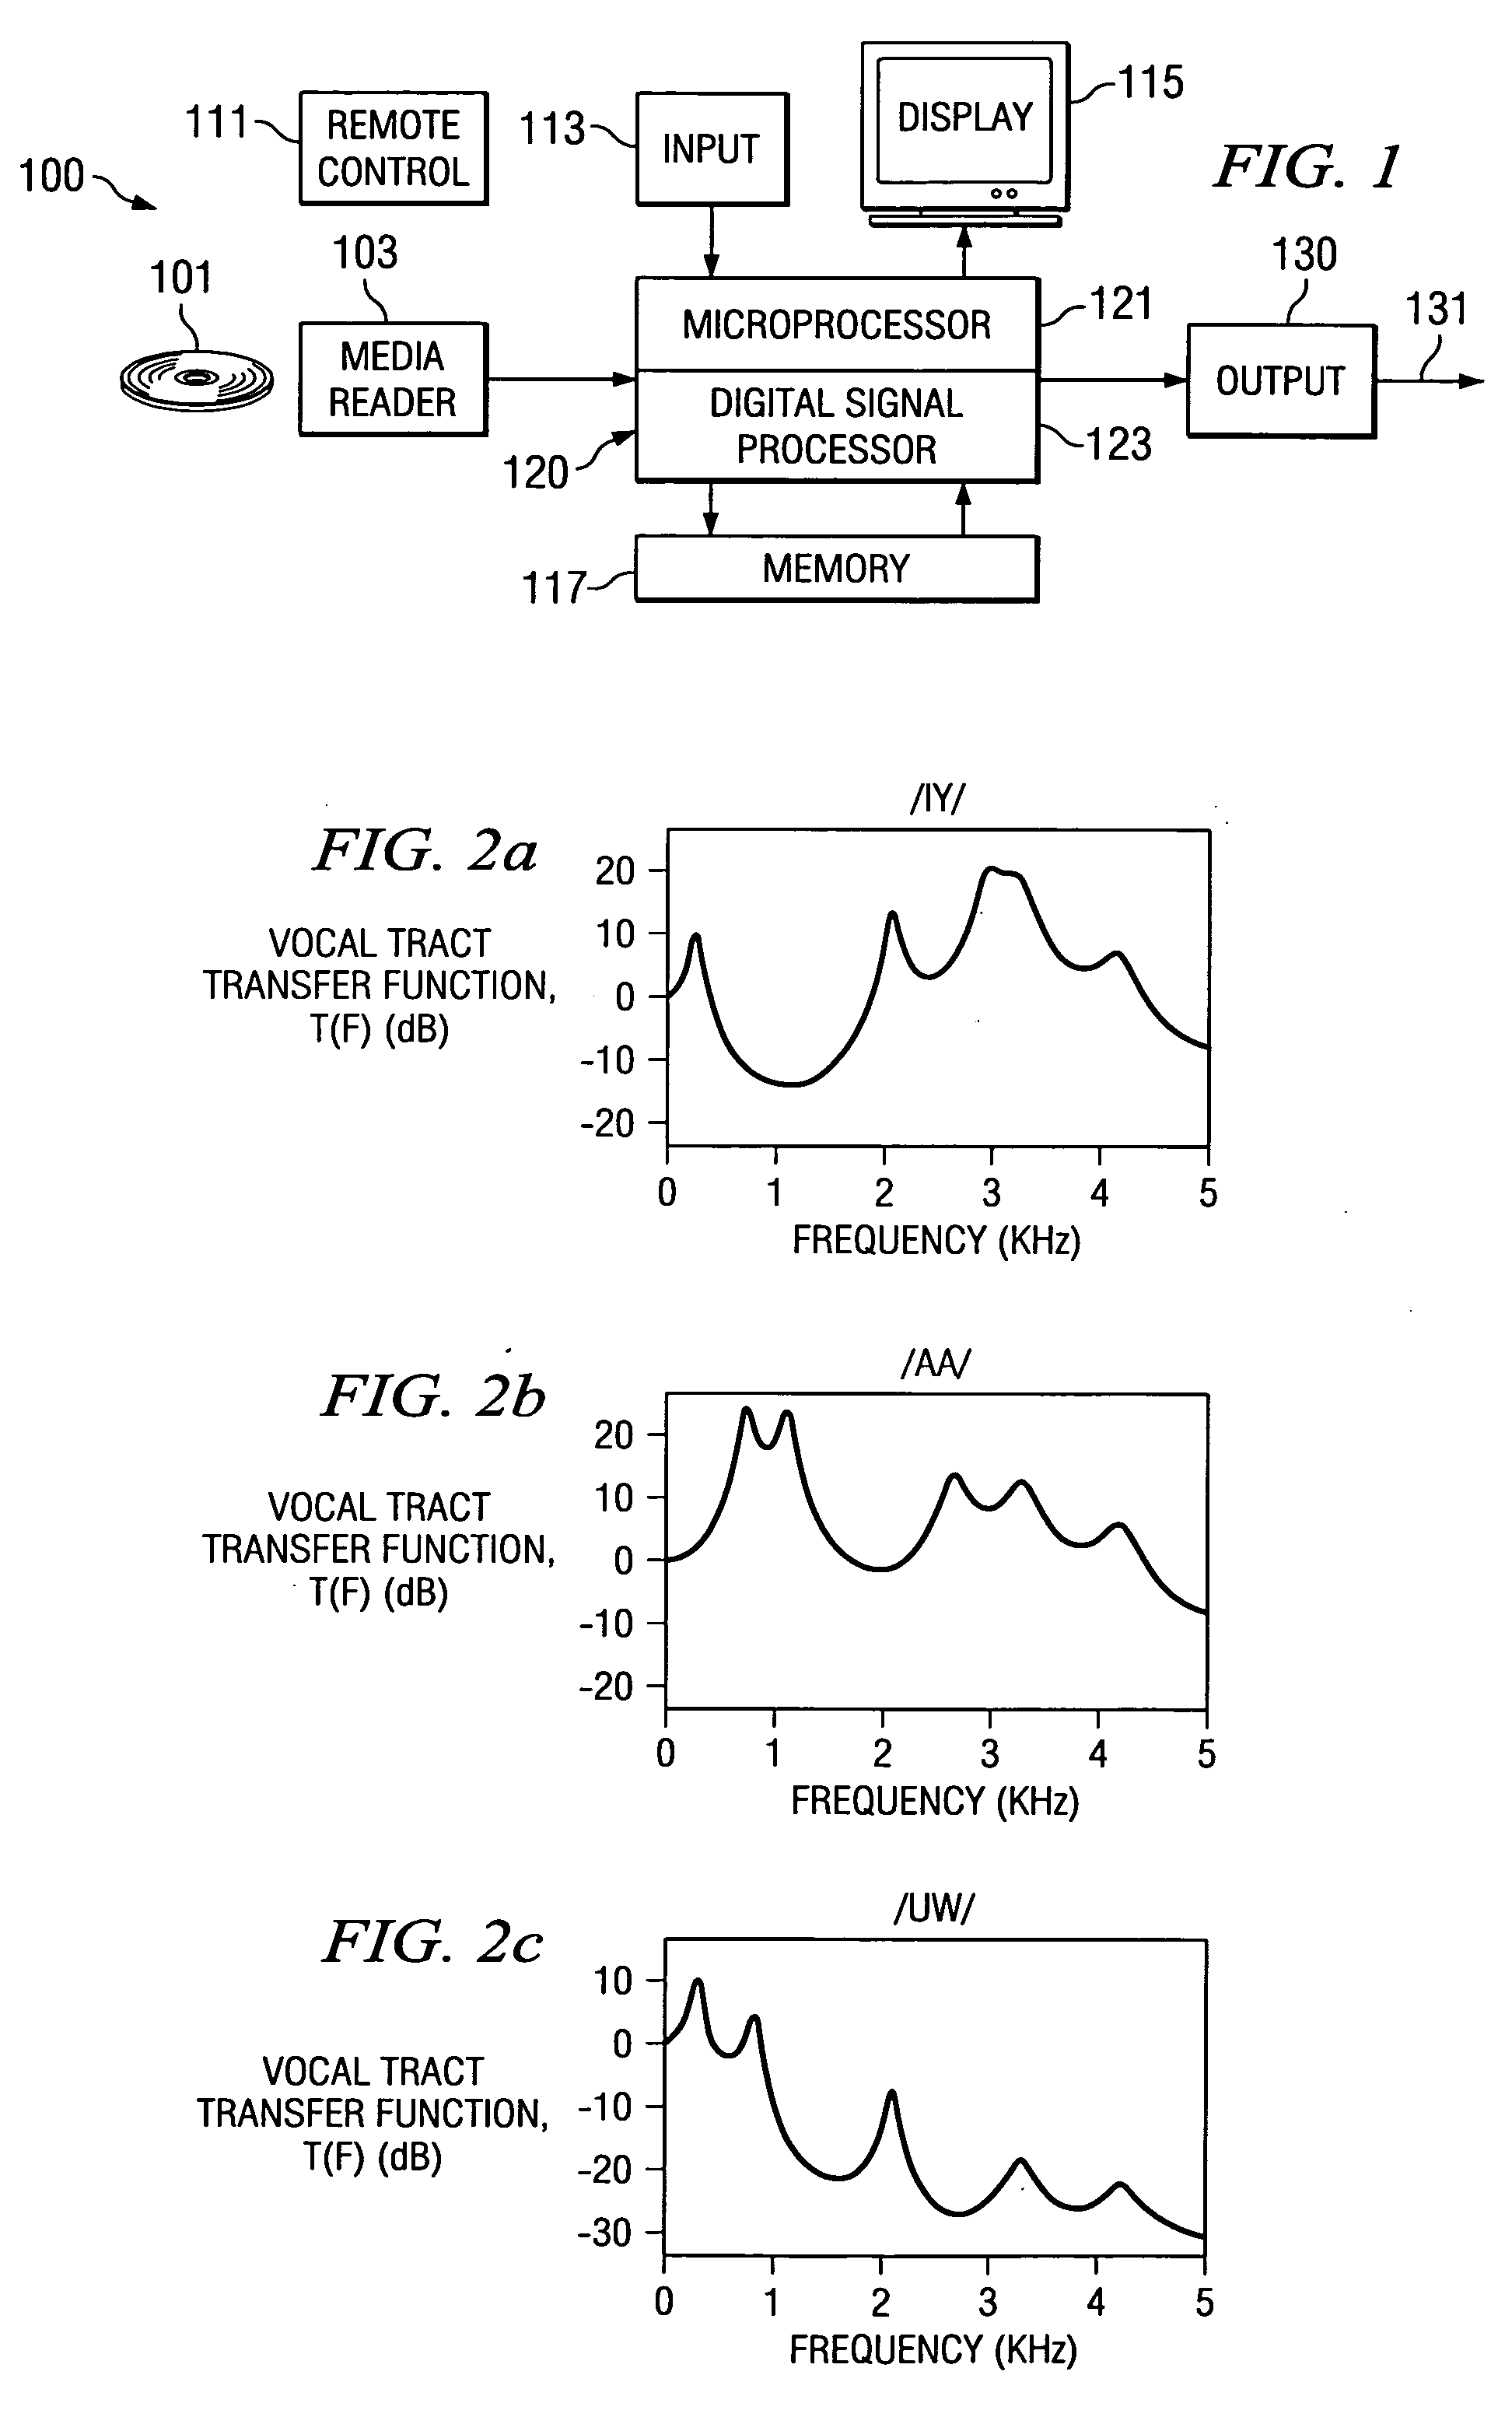 Binaural sound localization using a formant-type cascade of resonators and anti-resonators